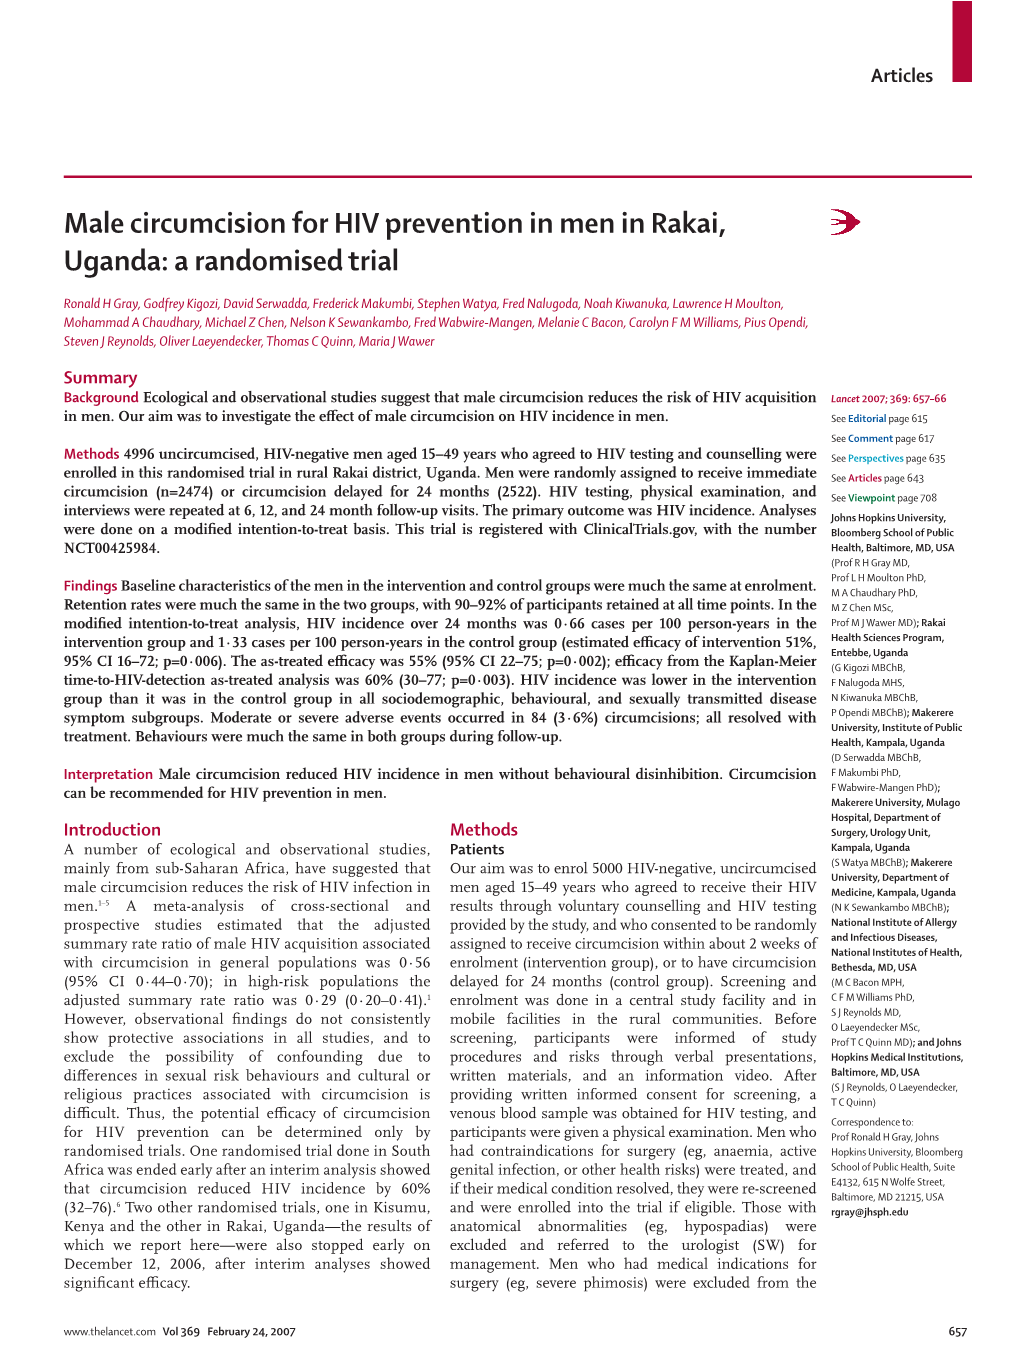 Male Circumcision for HIV Prevention in Men in Rakai, Uganda: a Randomised Trial